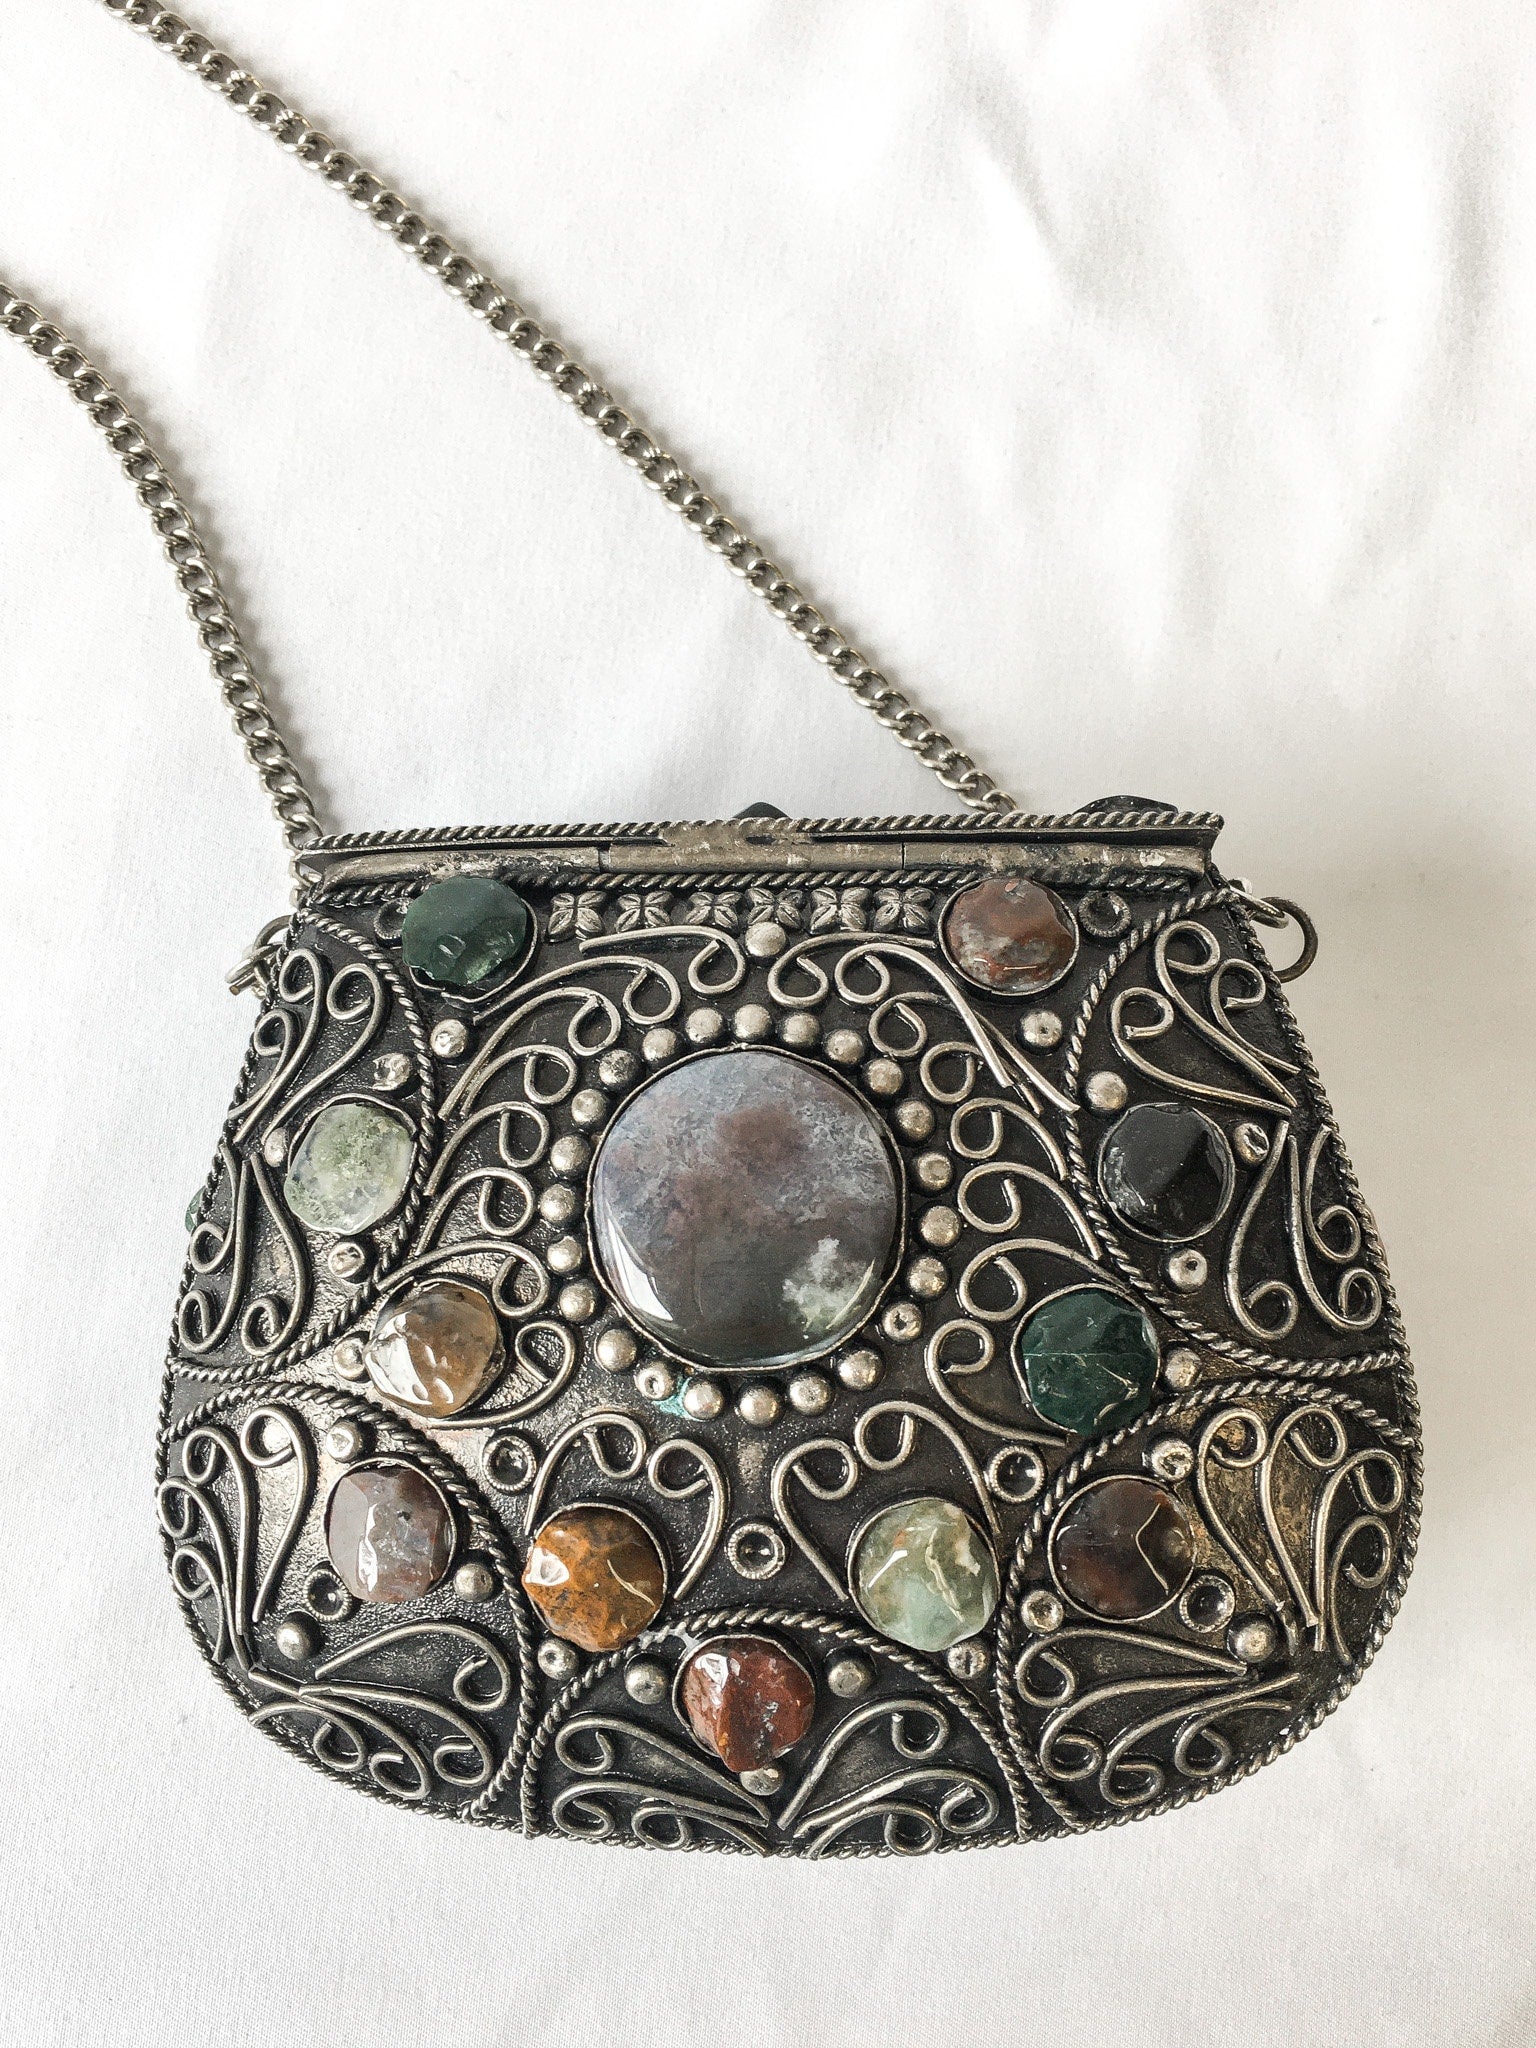 Vintage Sajai Metal Purse with Natural Agate Stones and Chain Strap, Unique Metal Handbag